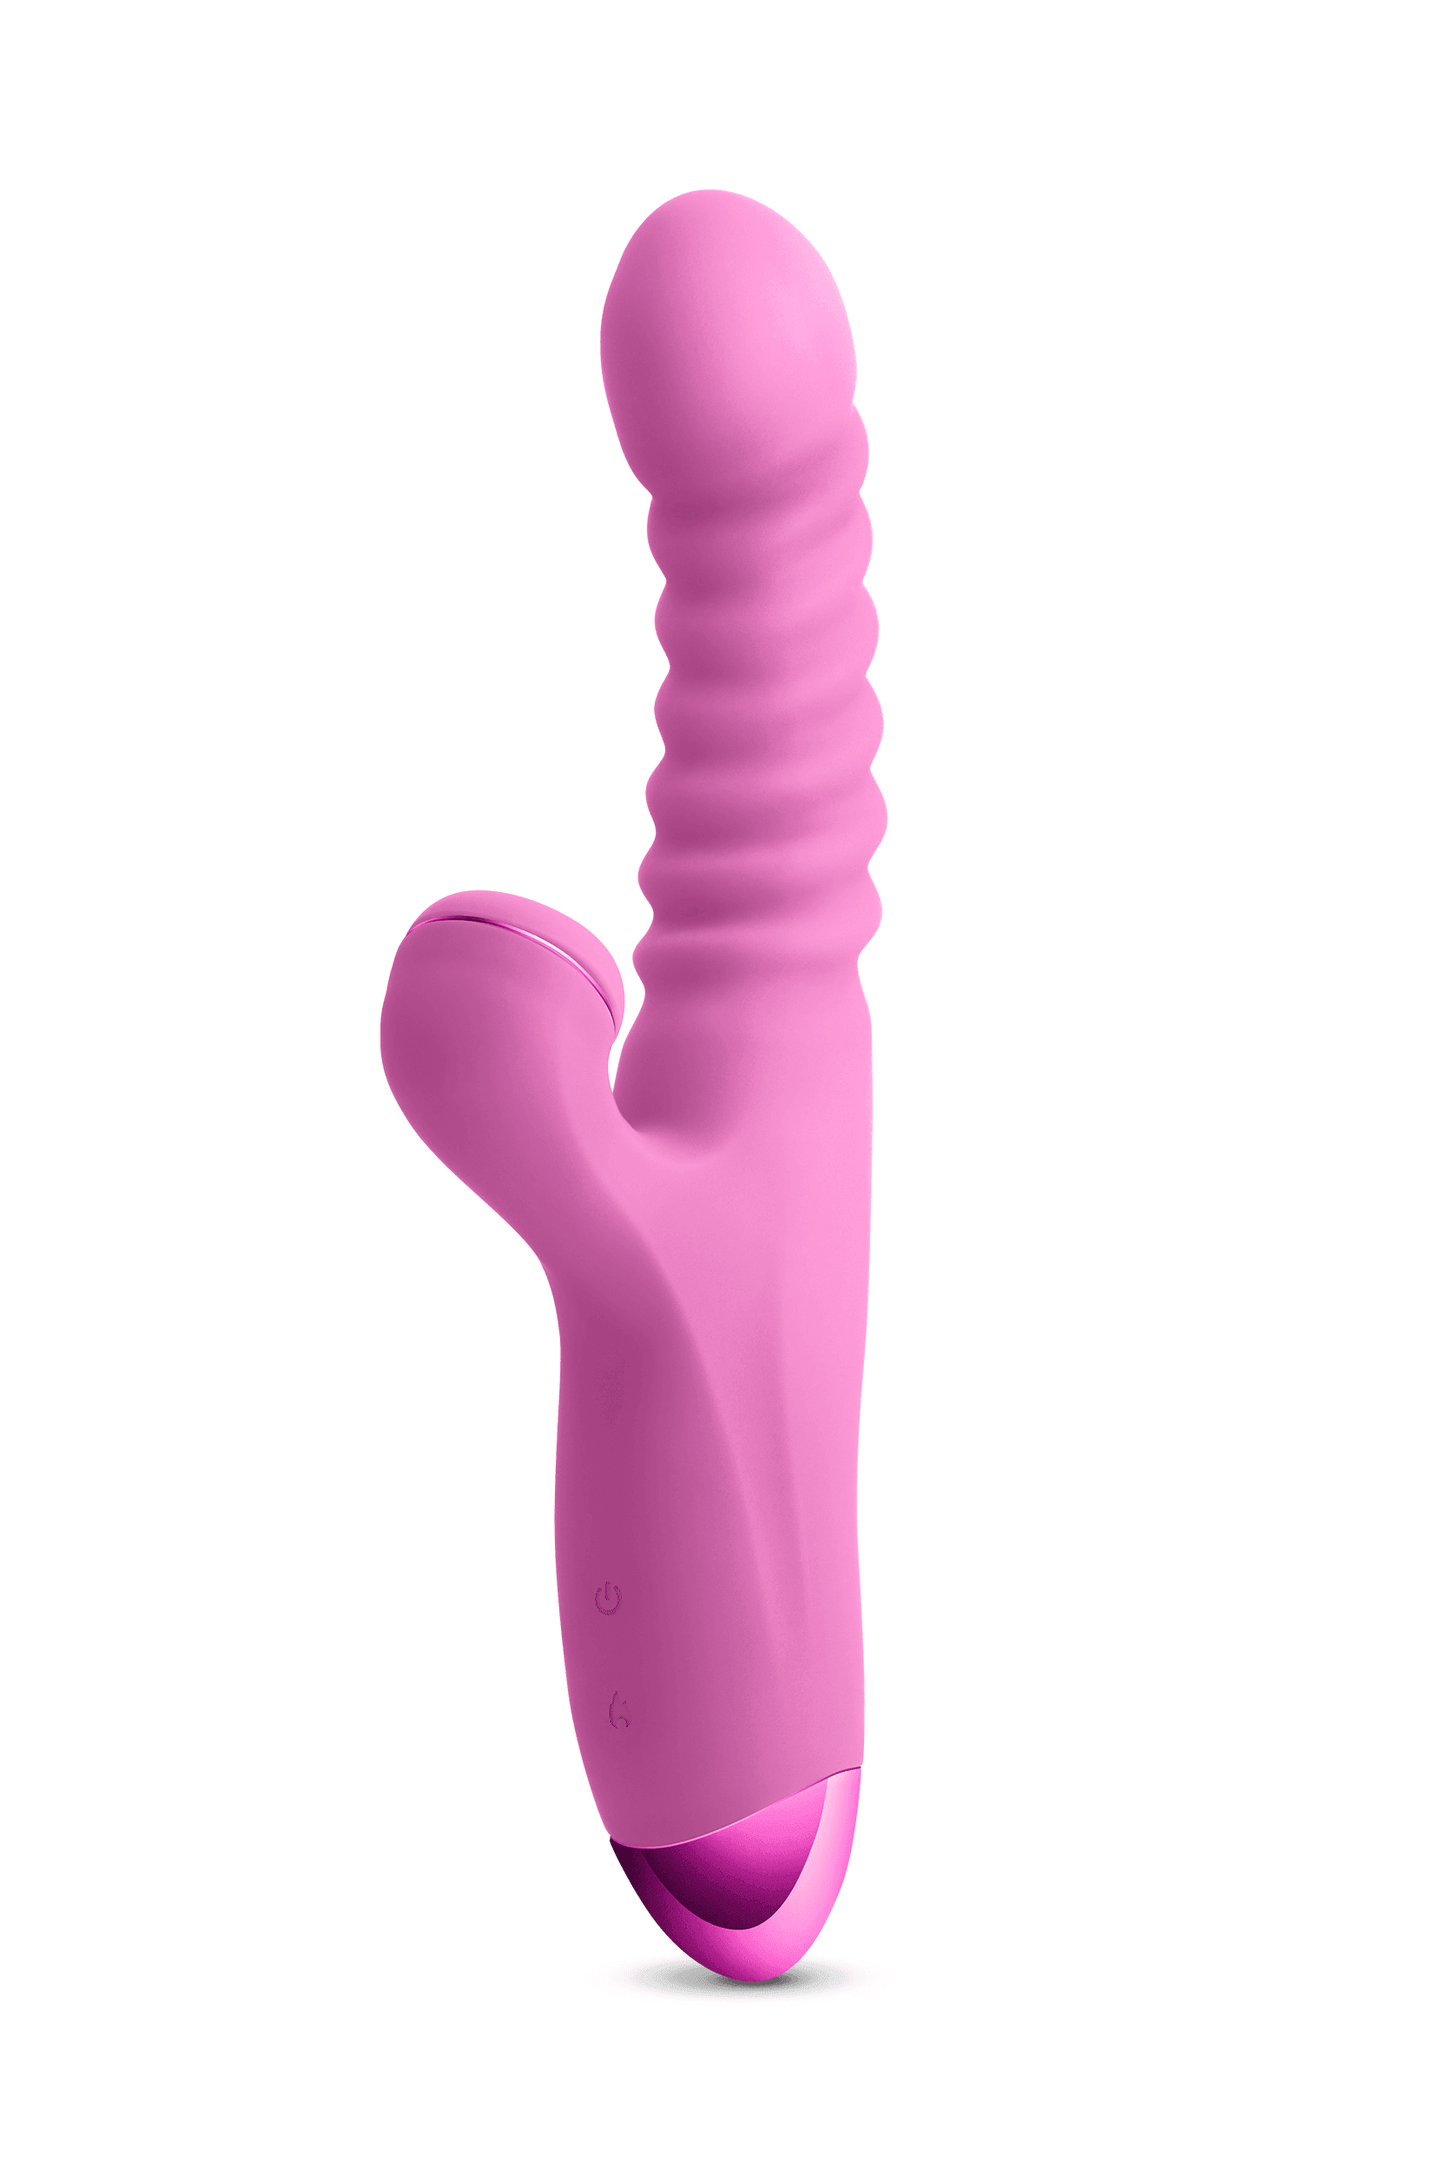 Luxe - Nova - Pink - My Sex Toy Hub